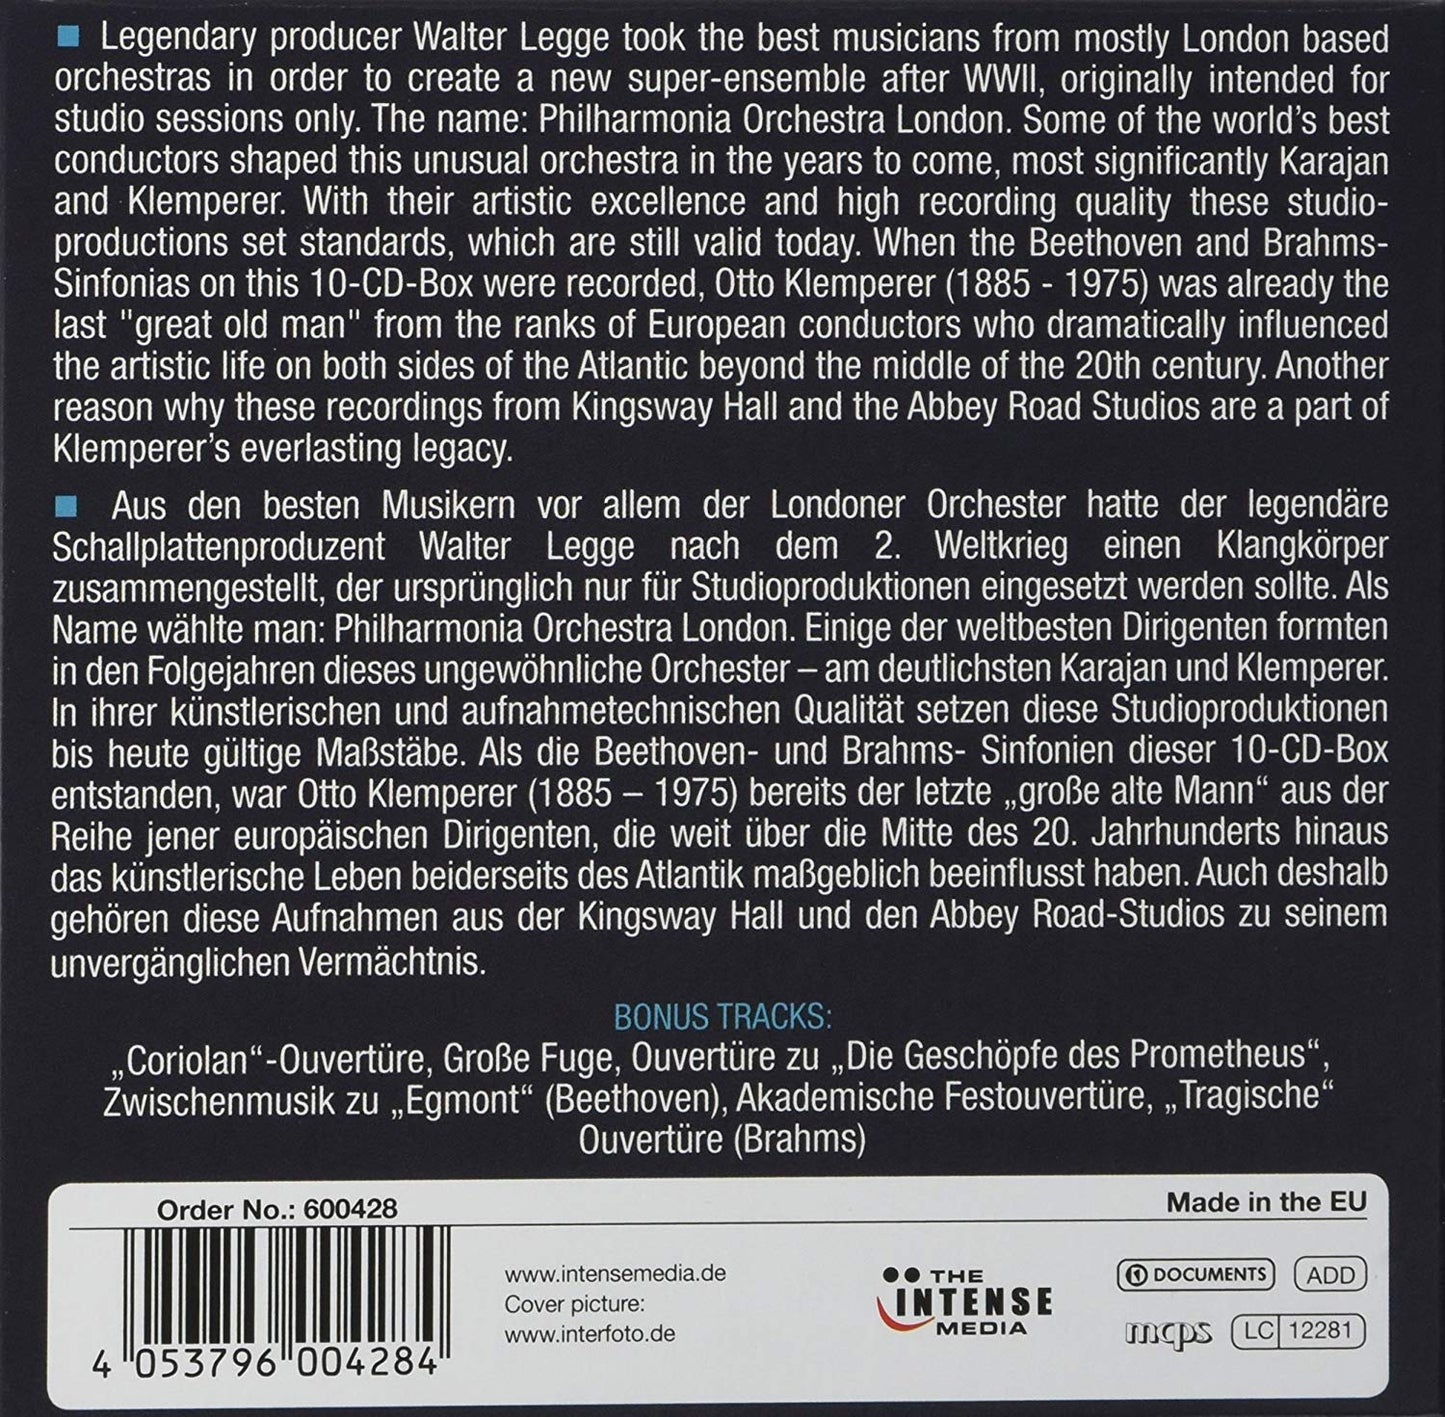 OTTO KLEMPERER: MILESTONES OF A LEGEND - BEETHOVEN AND BRAHMS SYMPHONIES (10 CDS)